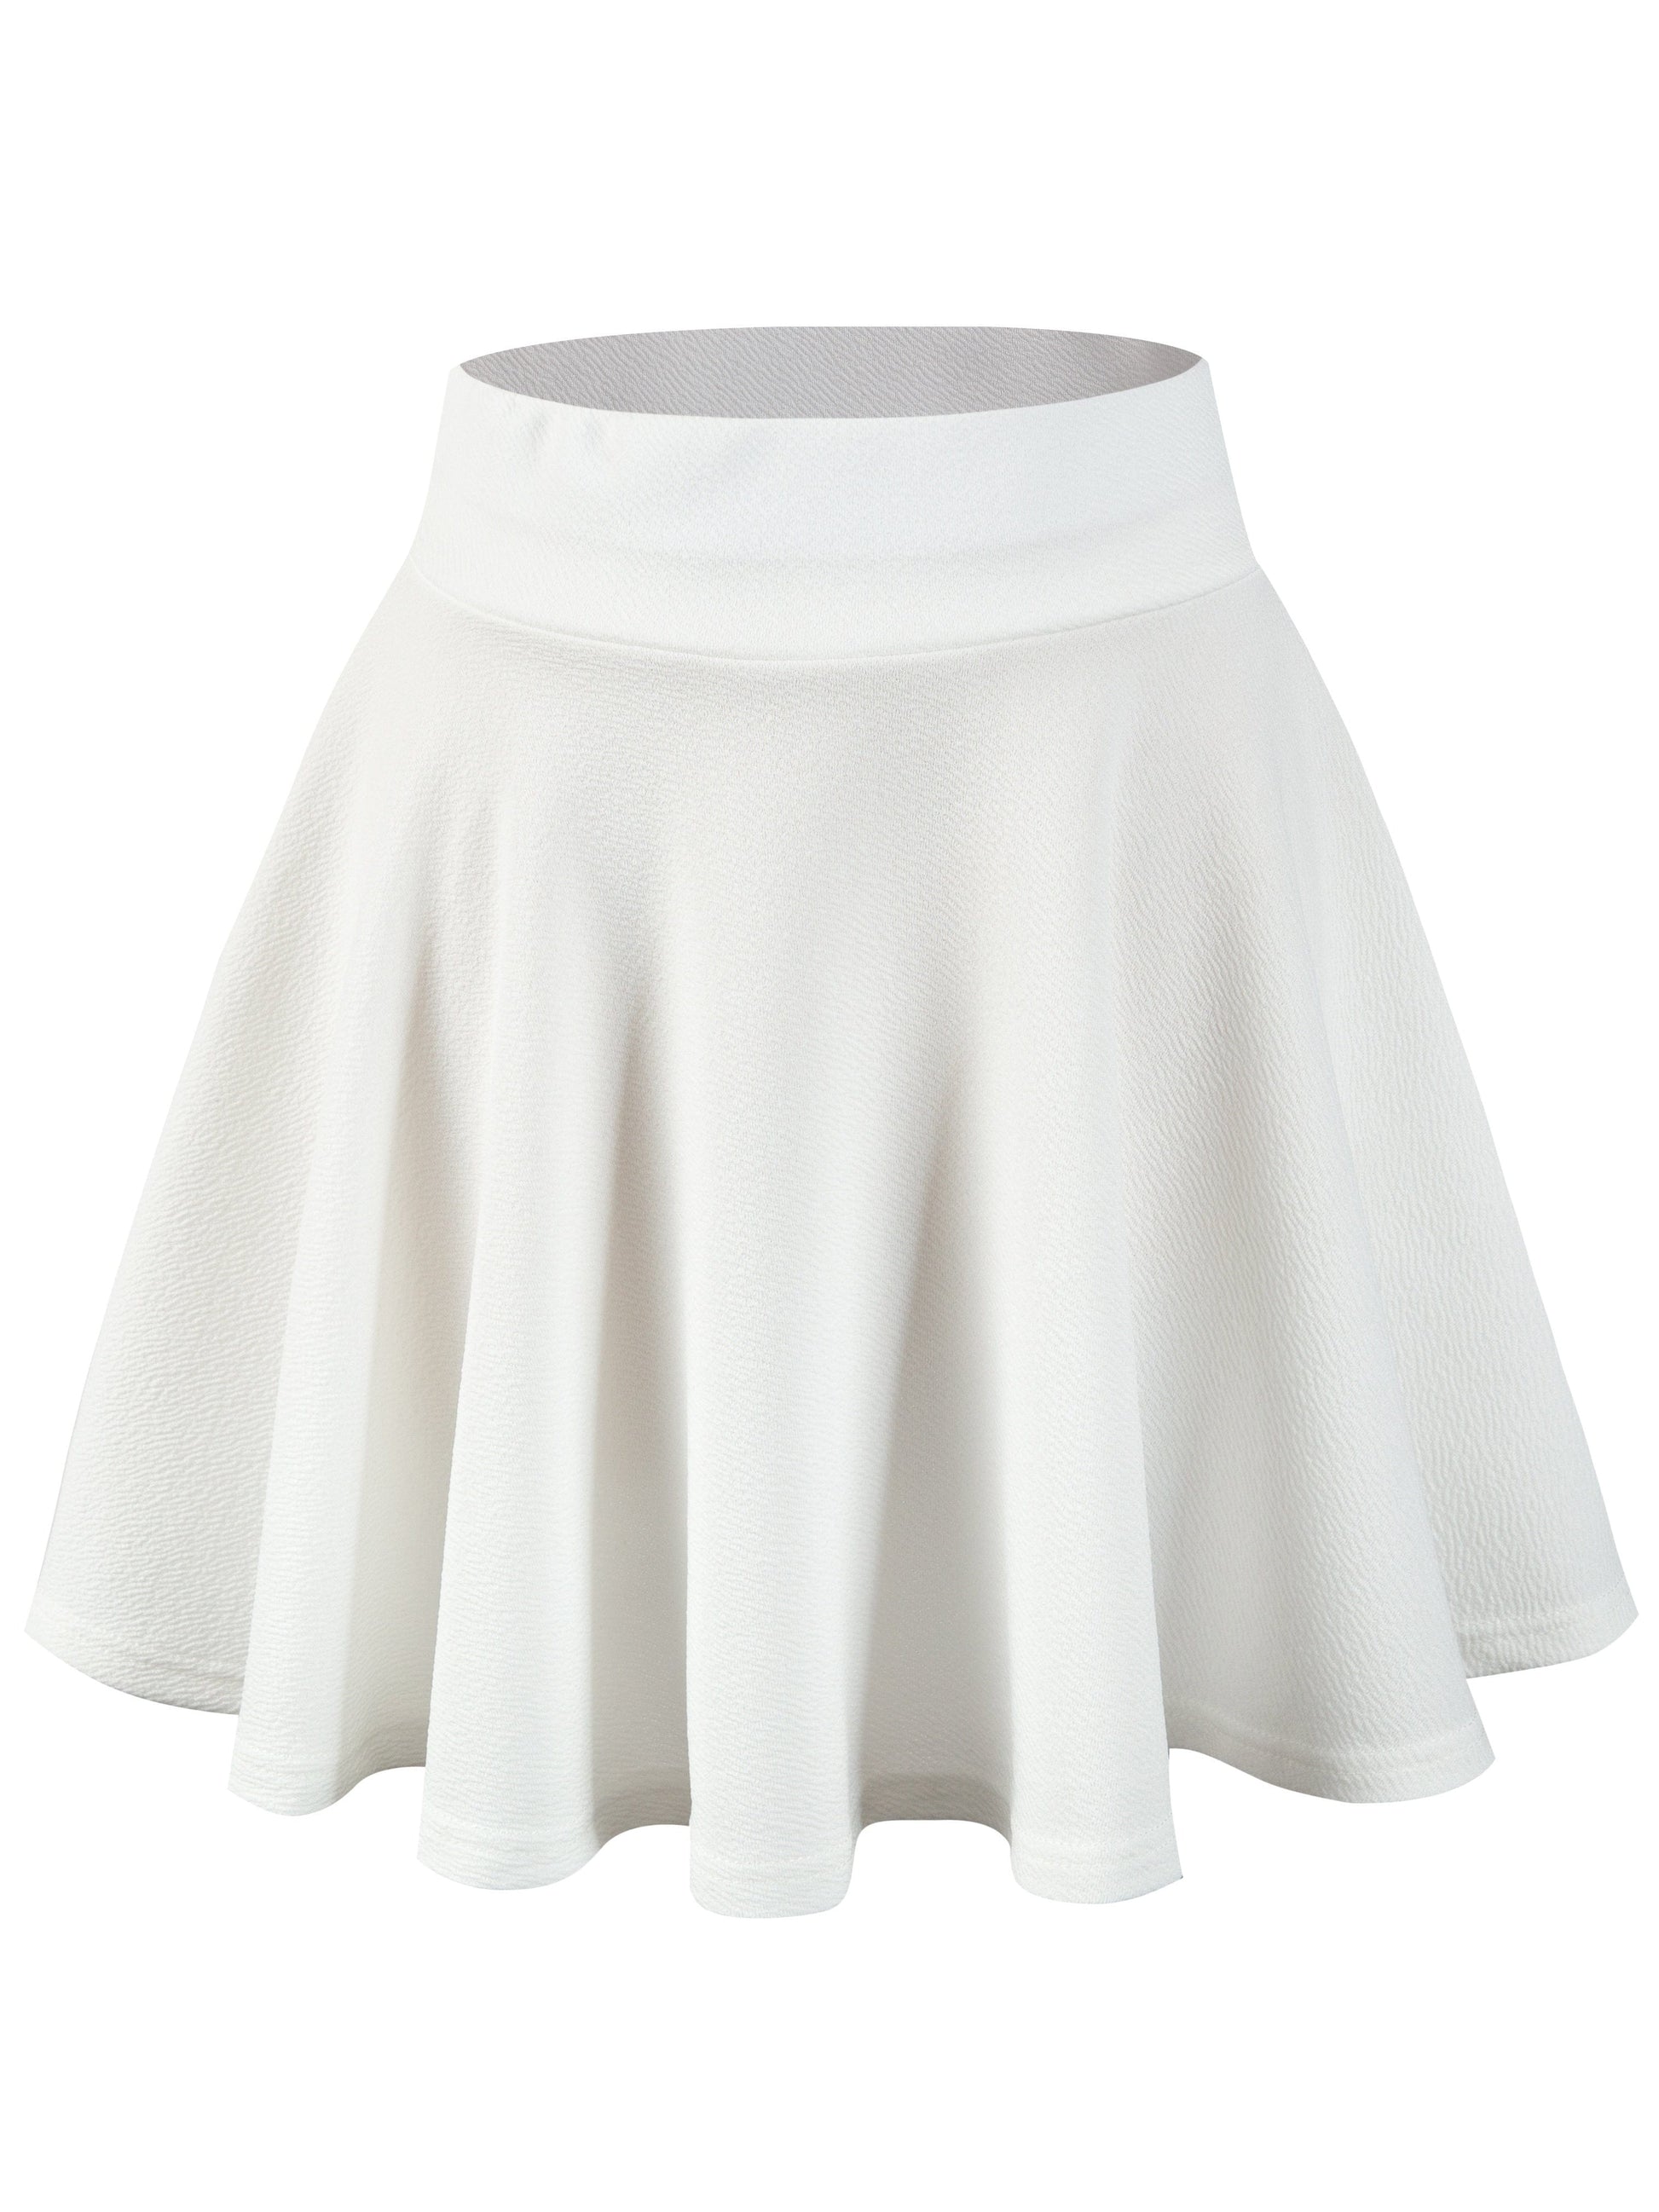 Casual Solid High Waist Pleated Skater Skirt Mini Dress DRE231012137WHIXS(2) White / XS(2)